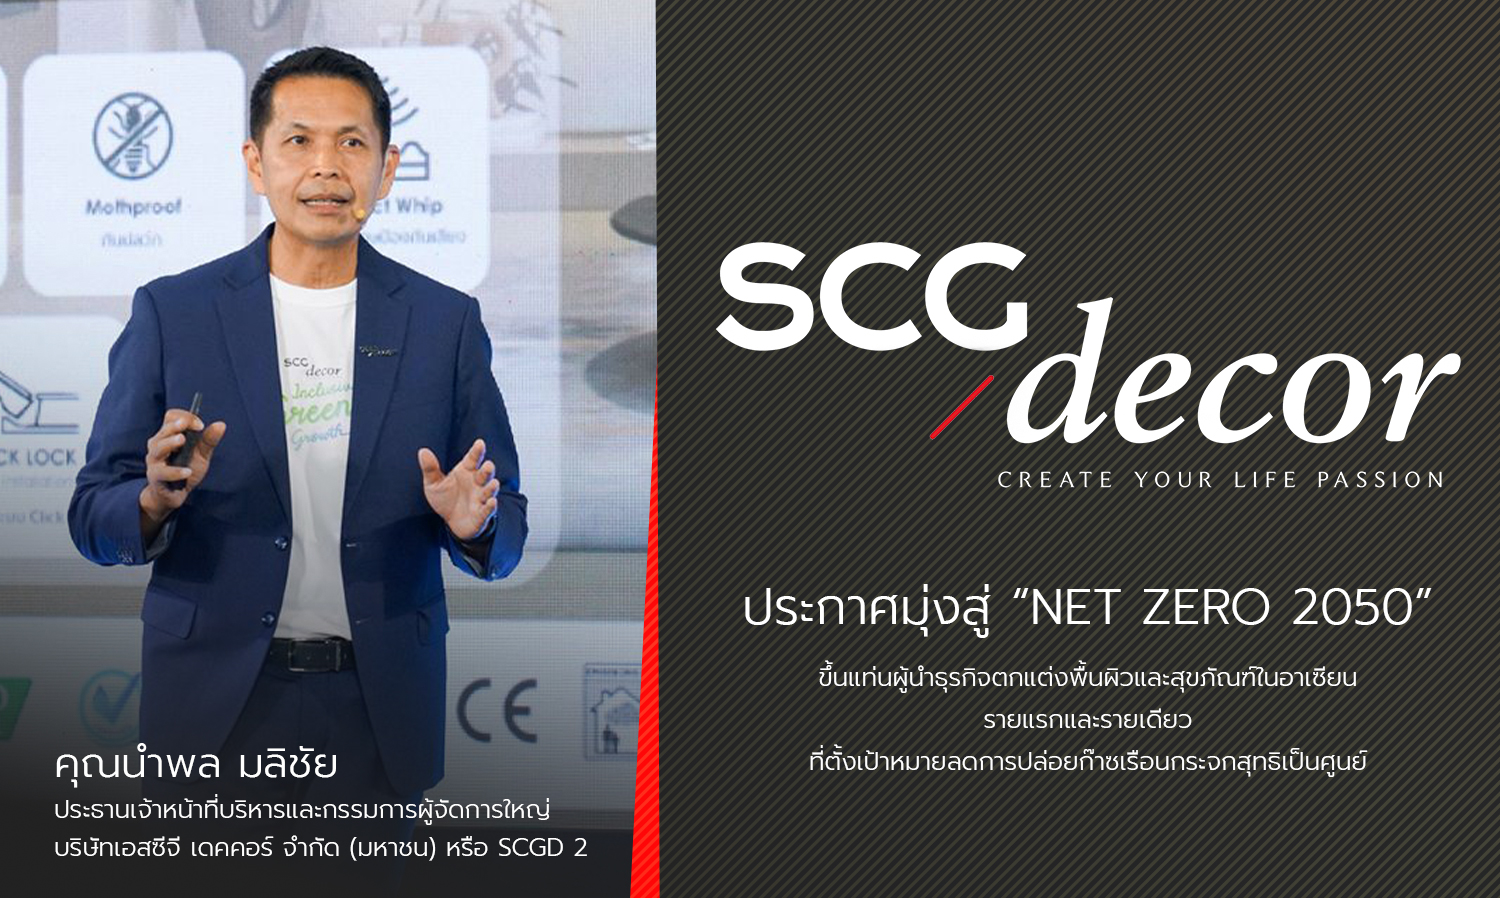 SCGD ประกาศมุ่งสู่ NET ZERO 2050 ขึ้นแท่นผู้นำธุรกิจตกแต่งพื้นผิวและสุขภัณฑ์ในอาเซียน รายแรกและรายเดียว  ที่ตั้งเป้าหมายลดการปล่อยก๊าซเรือนกระจกสุทธิเป็นศูนย์